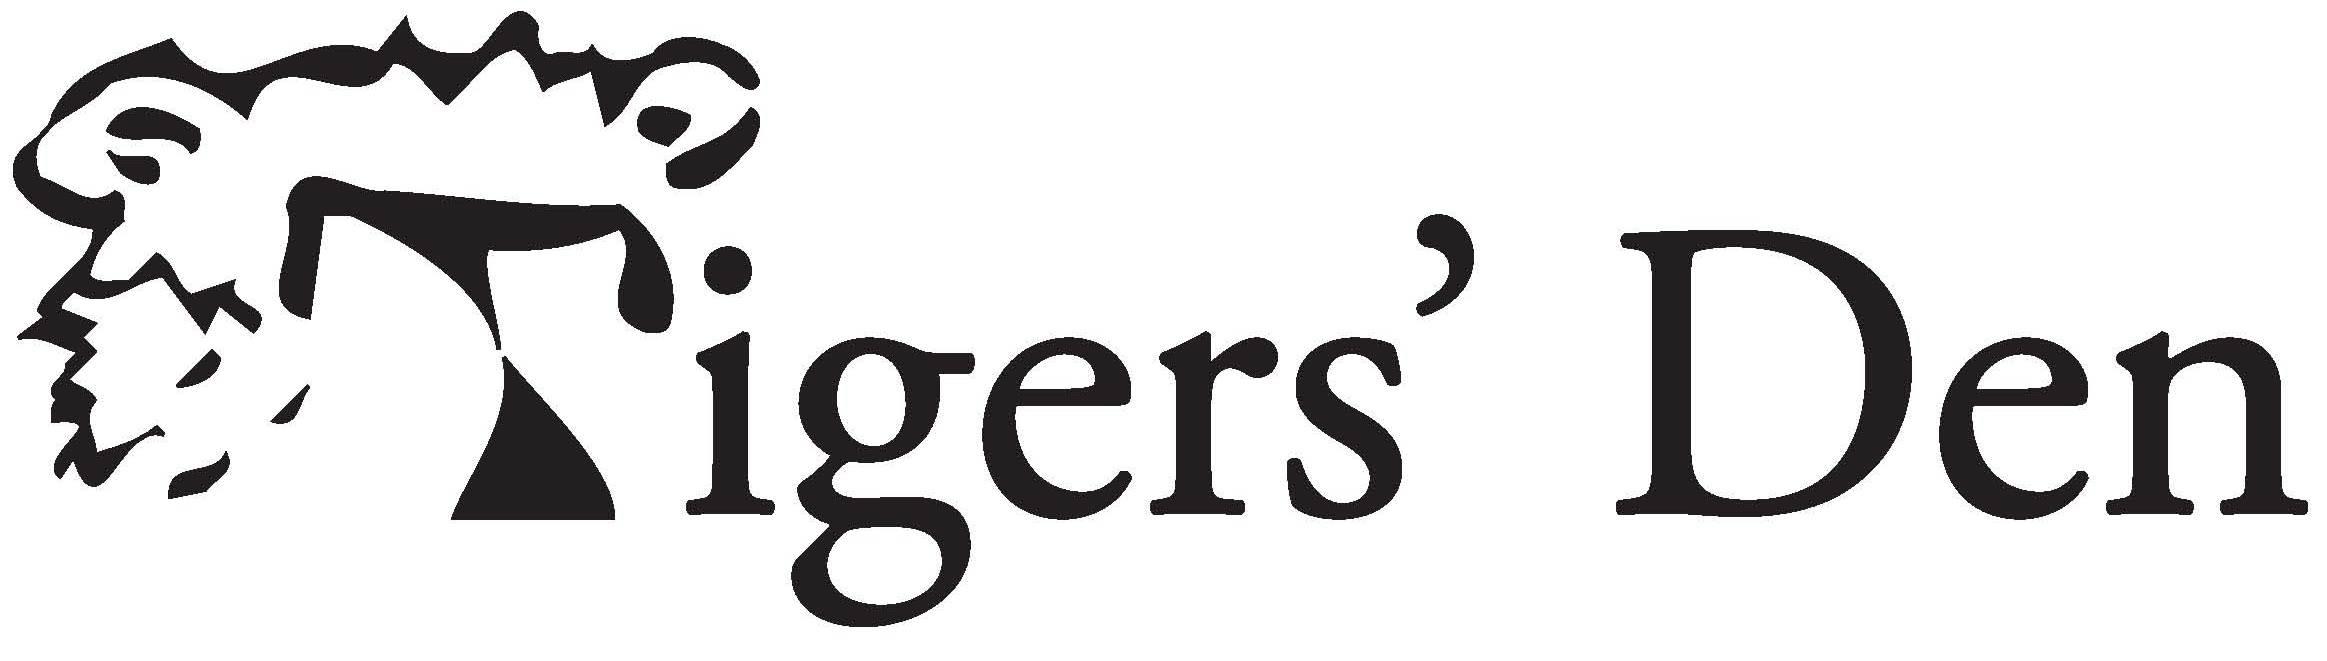 Tigers' Den Logo